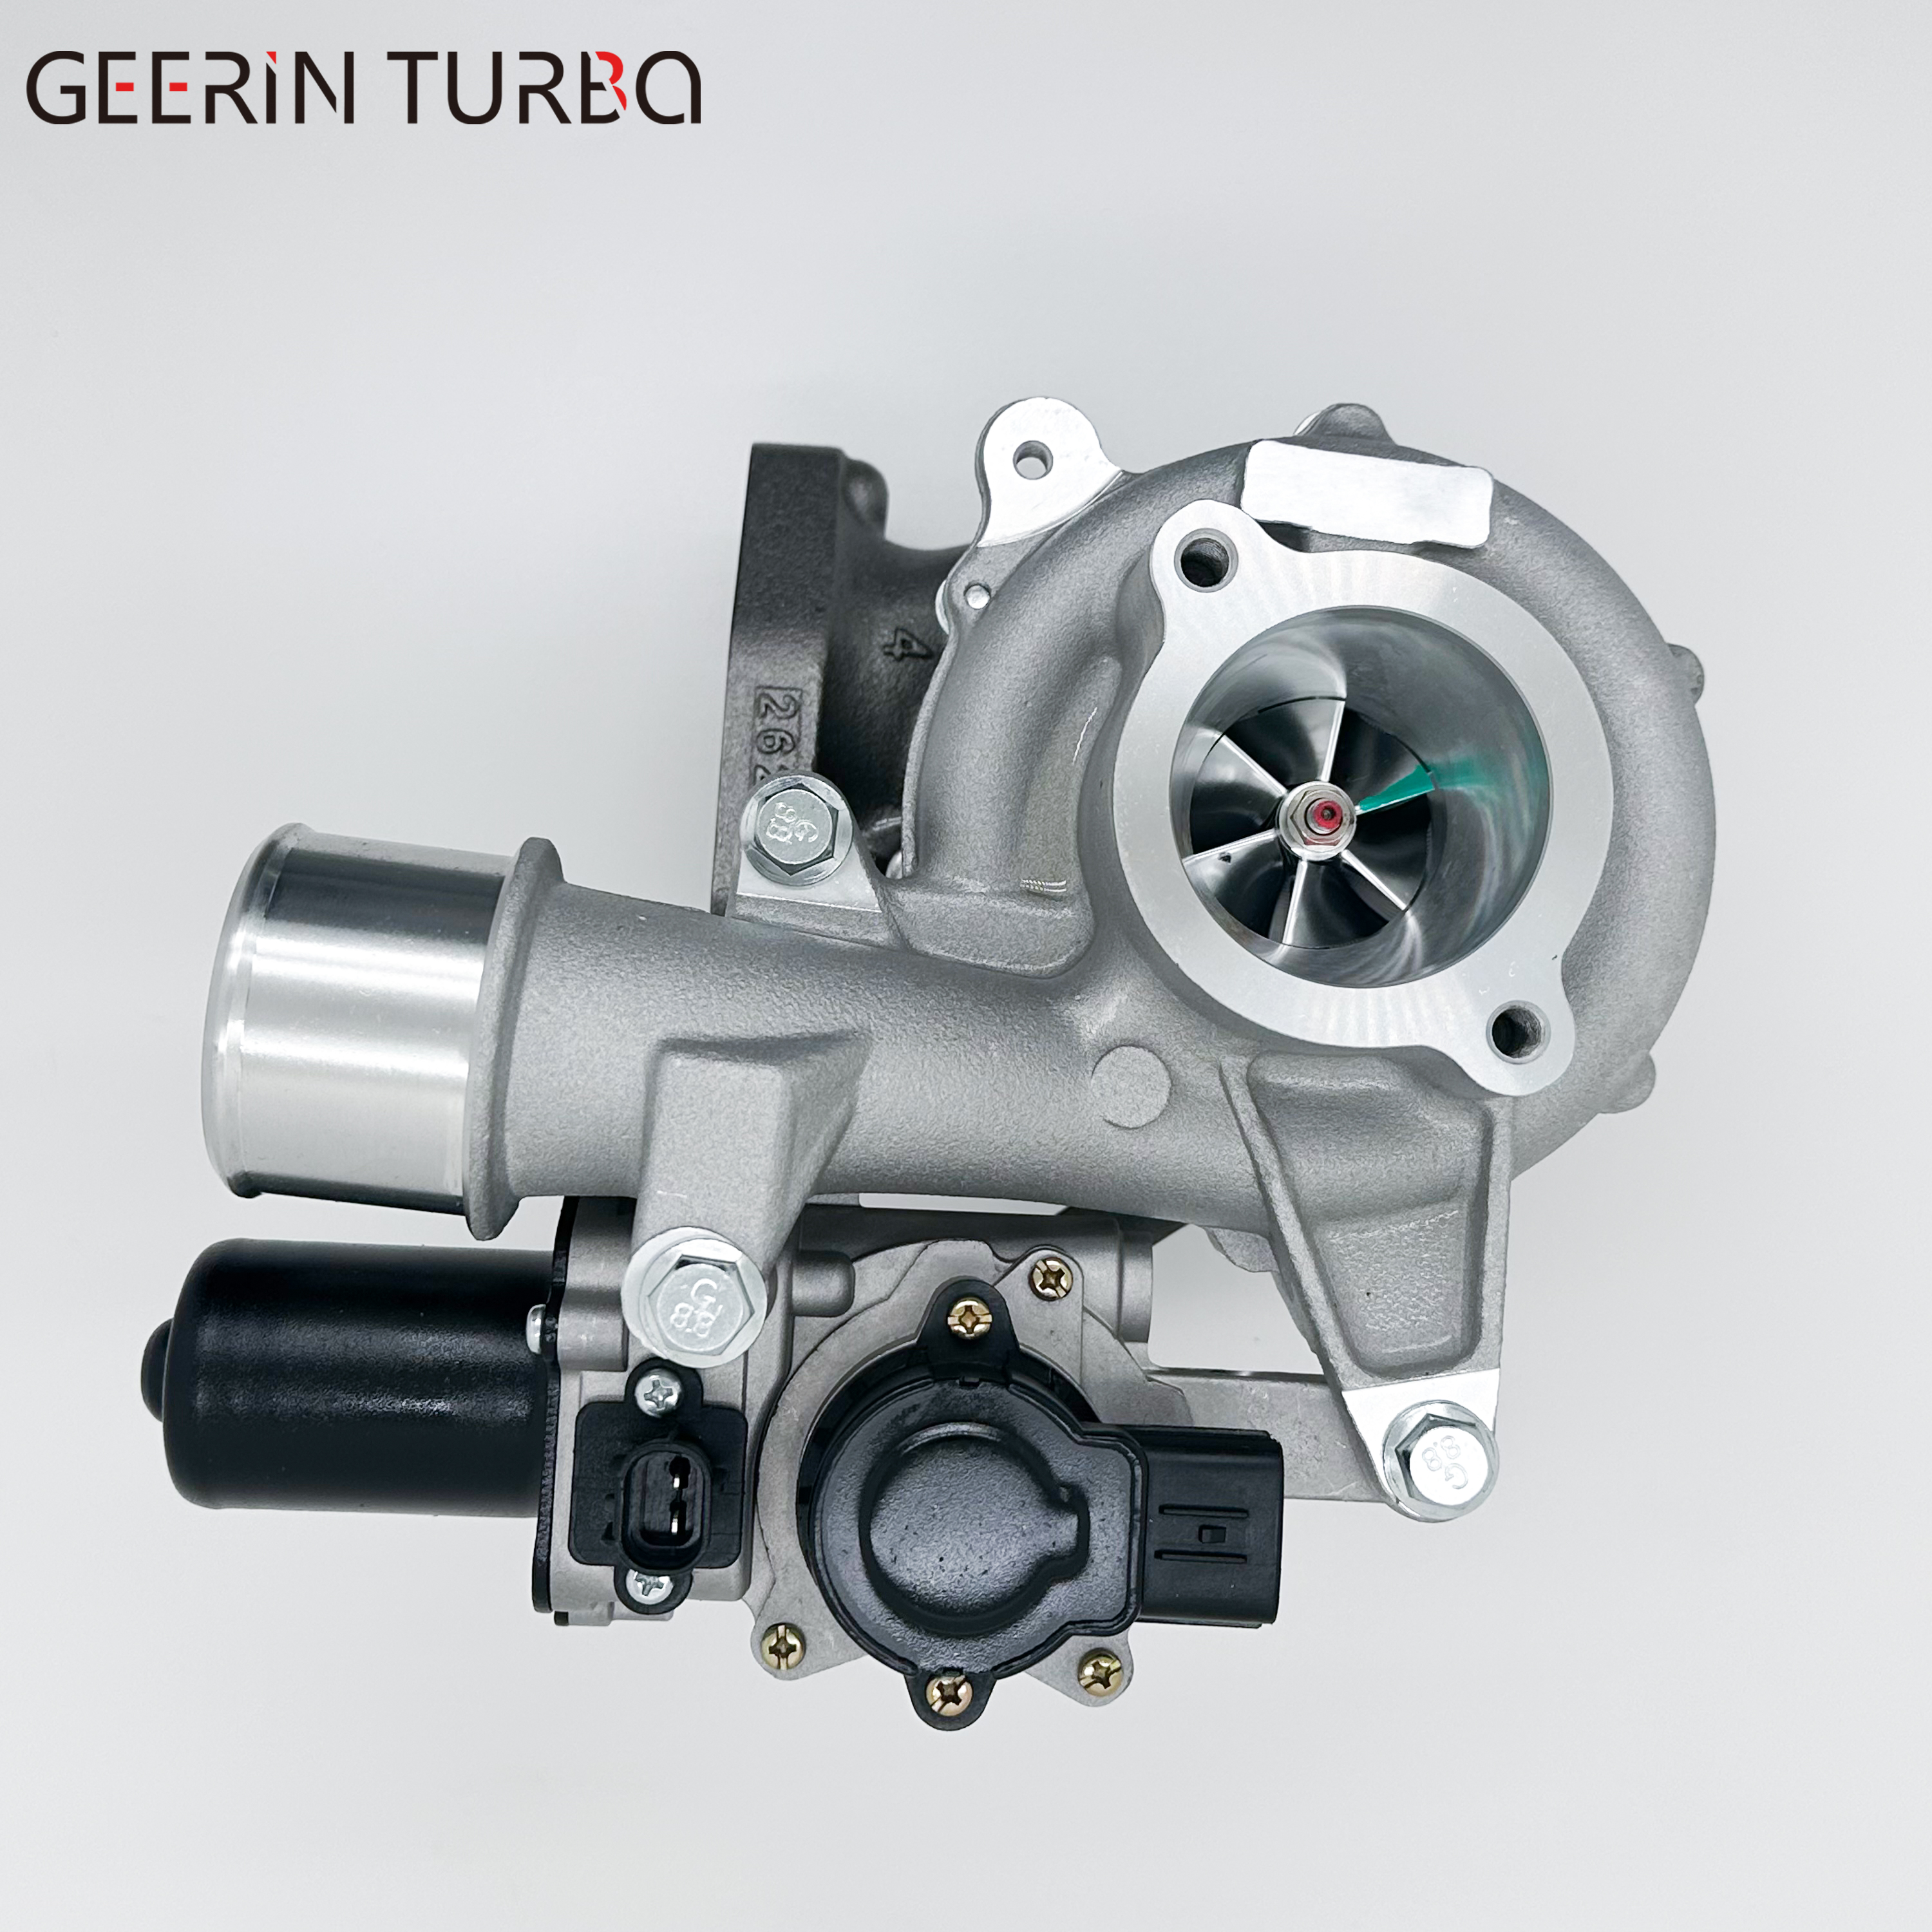 Turbocompresor del turbocompresor de CT16V 17201-OL060 para Toyota